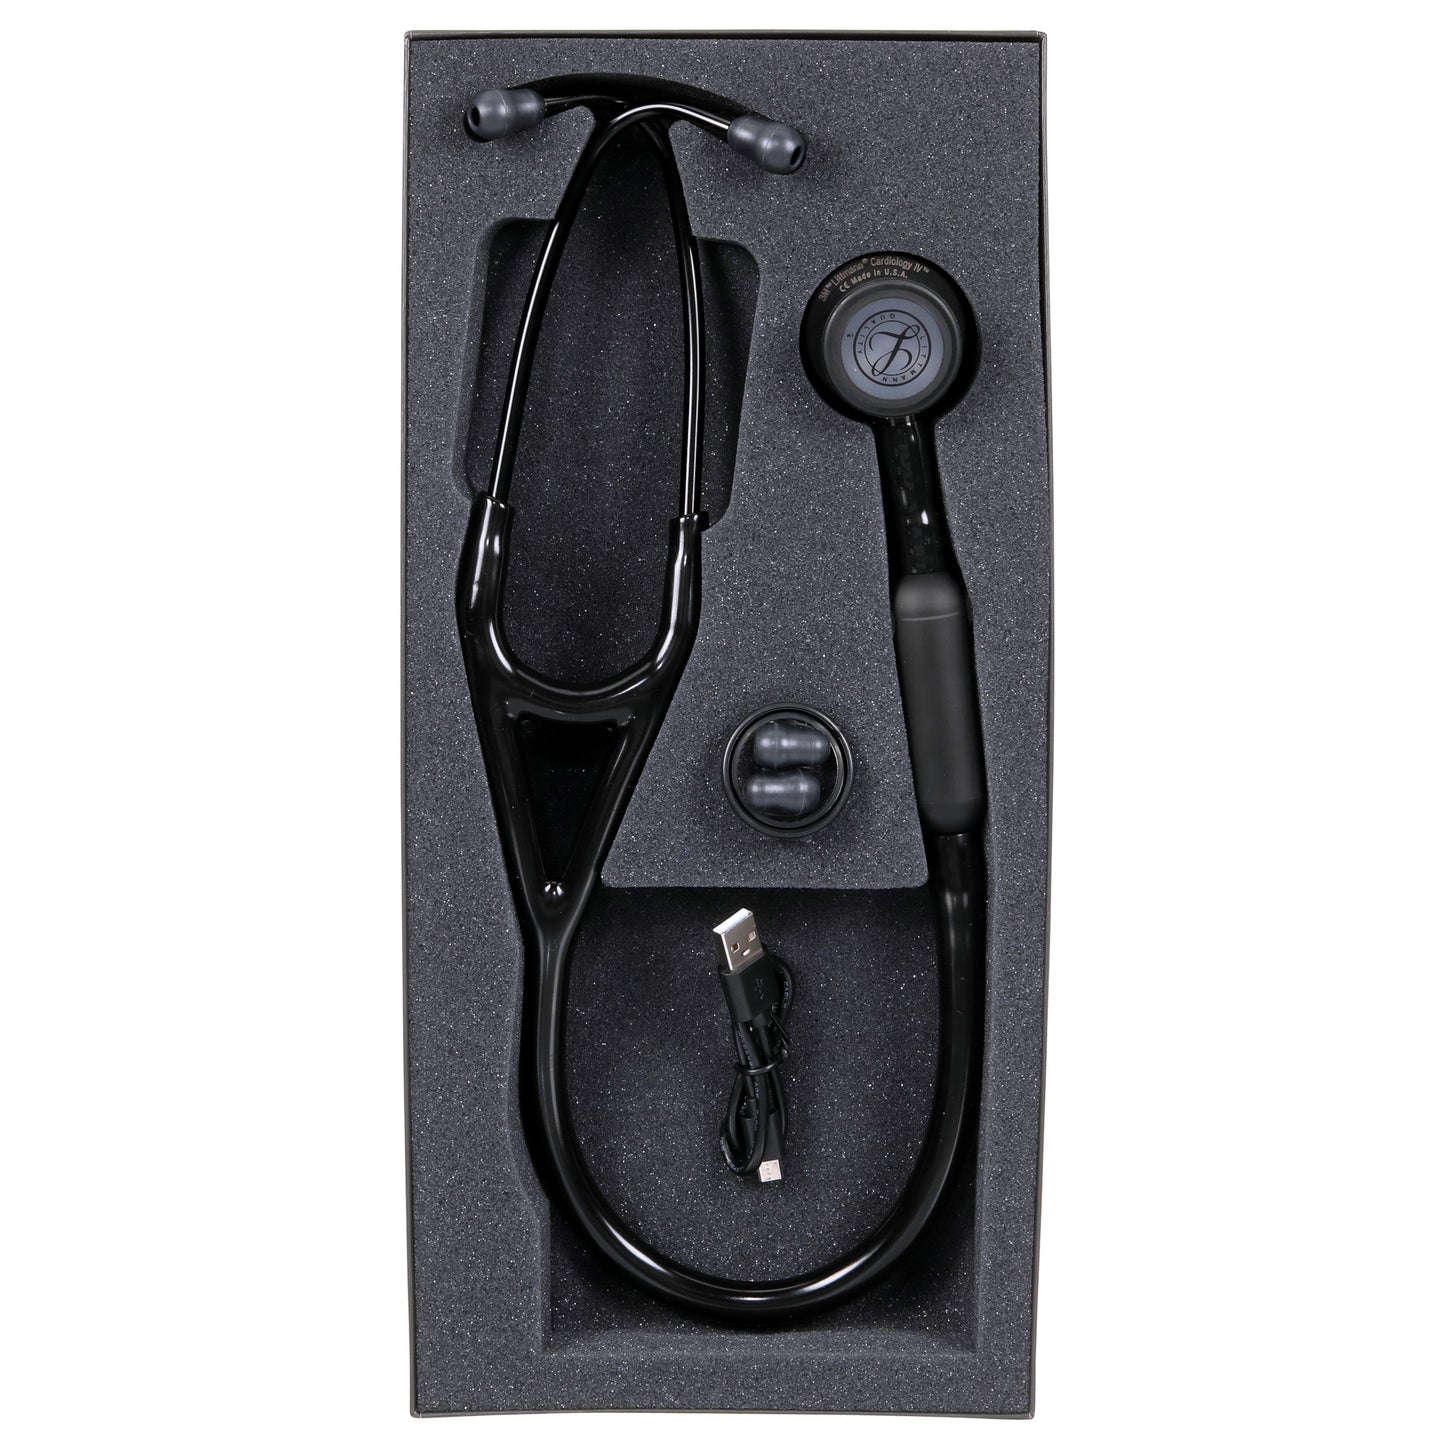 3M™ Littmann® CORE Digital Stethoscope - Black 8480 3M Littmann